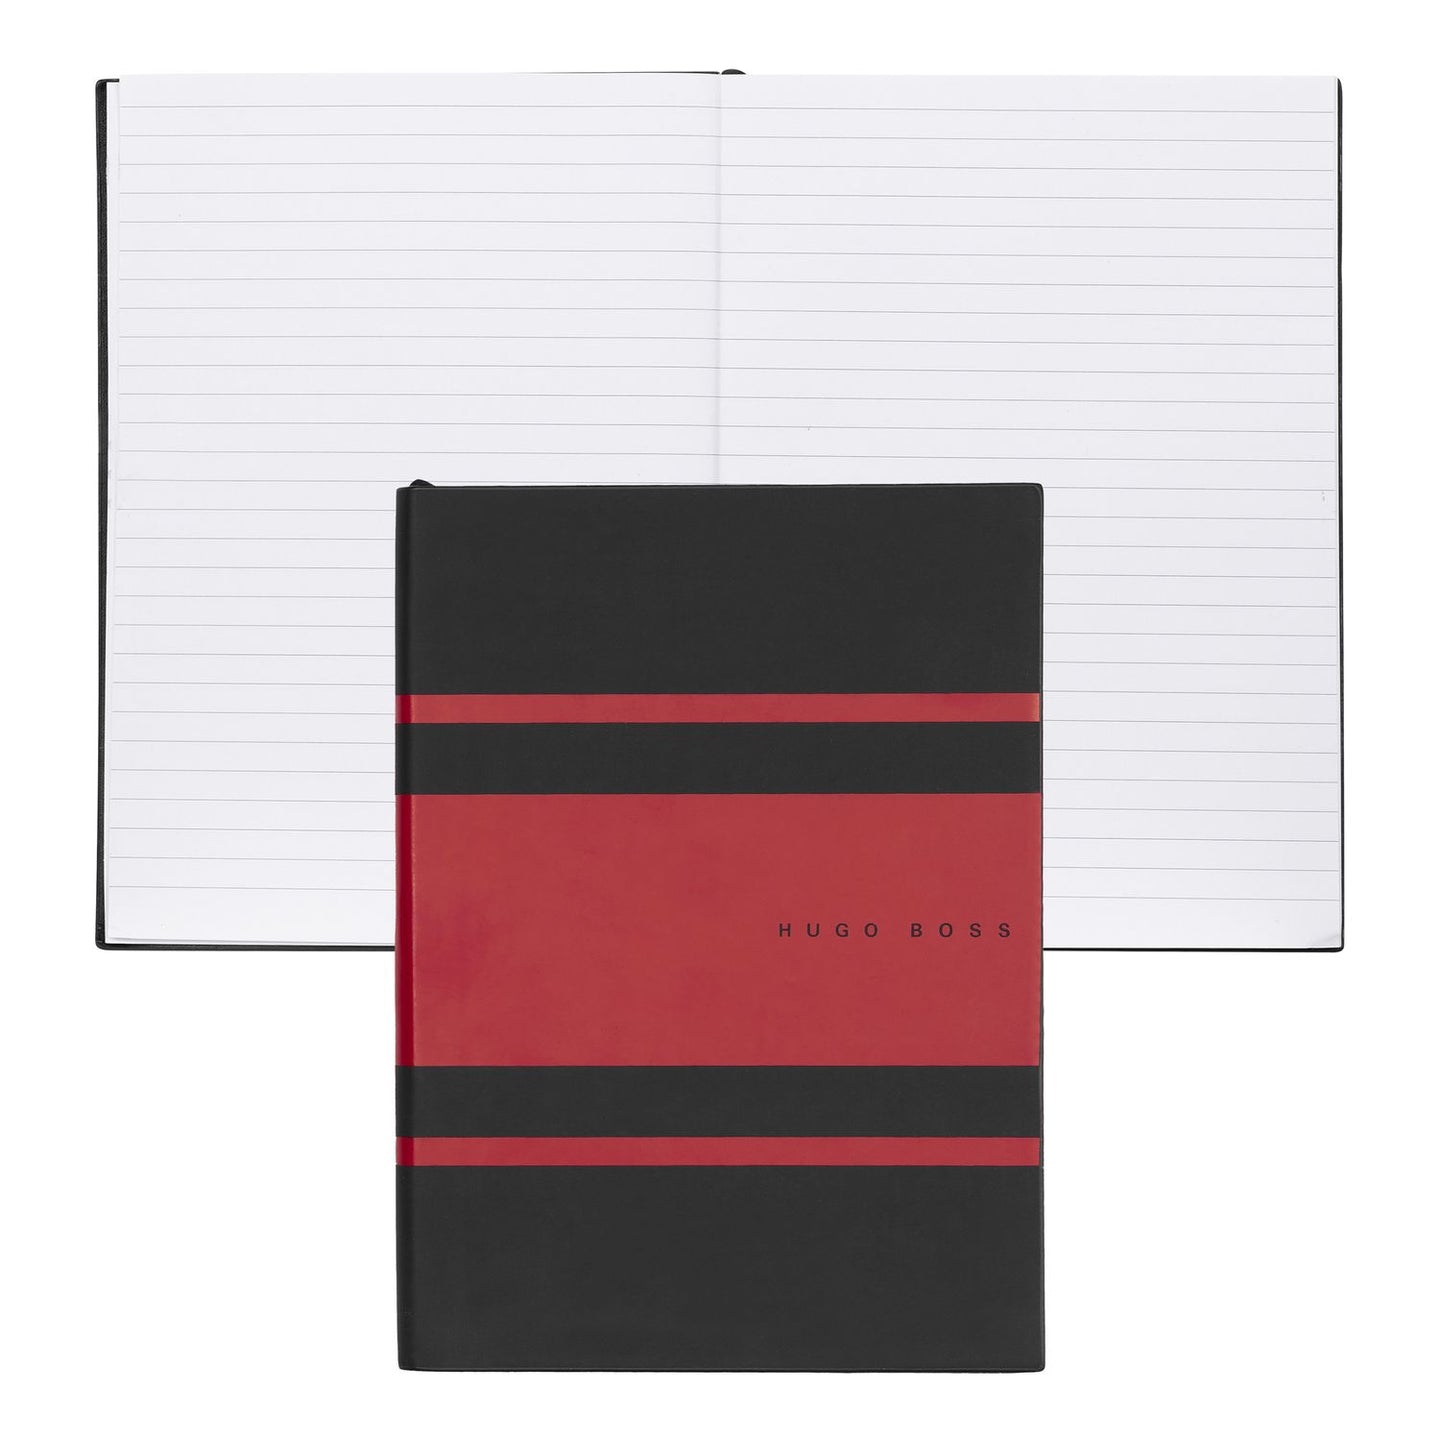 Hugo Boss Notizbuch A5 Essential Gear Matrix Red Lined